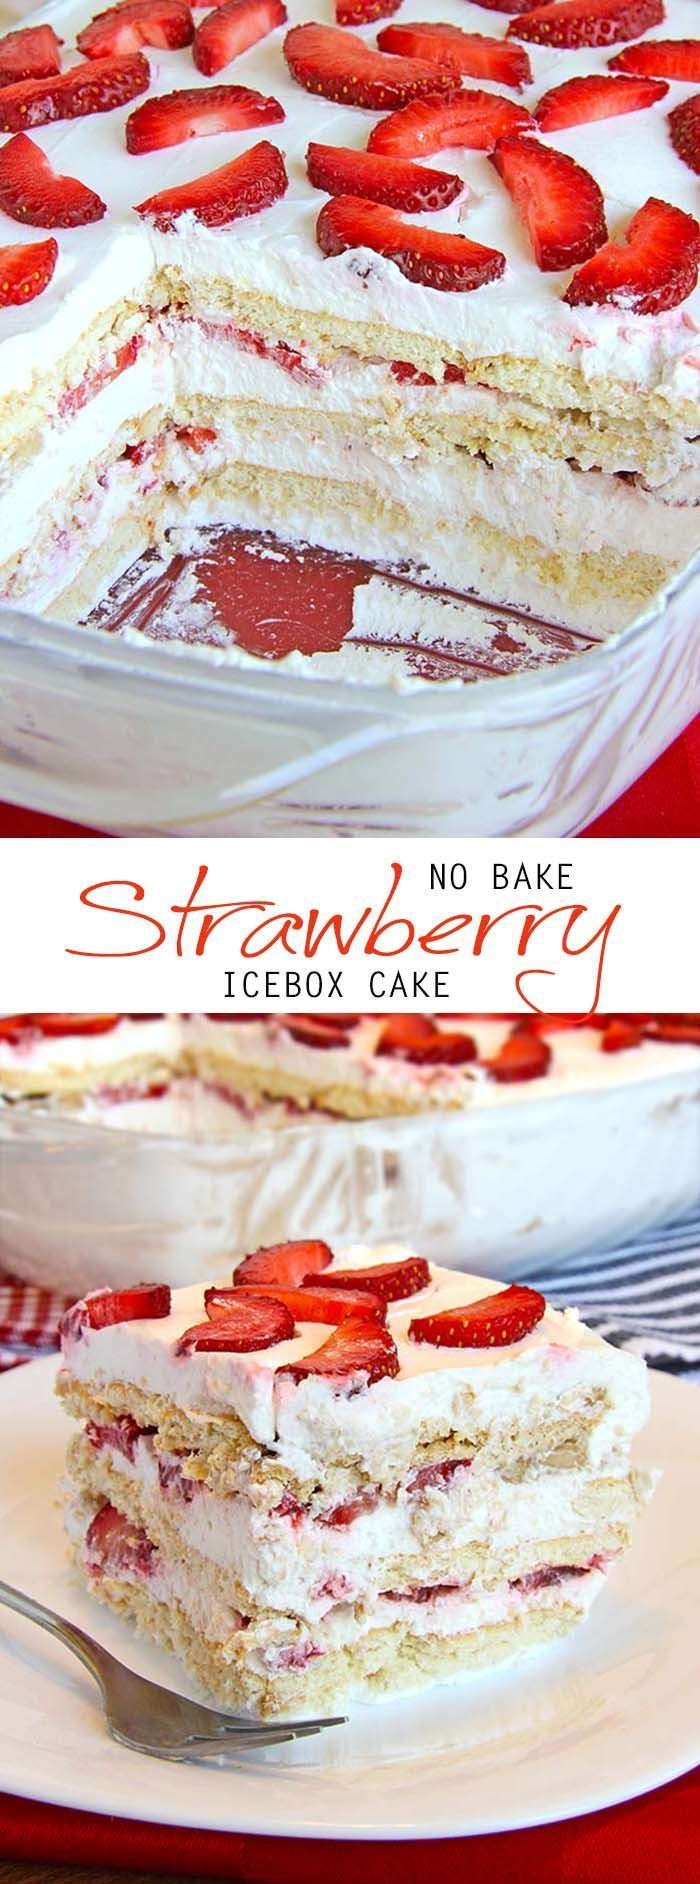 Easy No Bake Summer Desserts
 No Bake Strawberry Icebox Cake Recipe